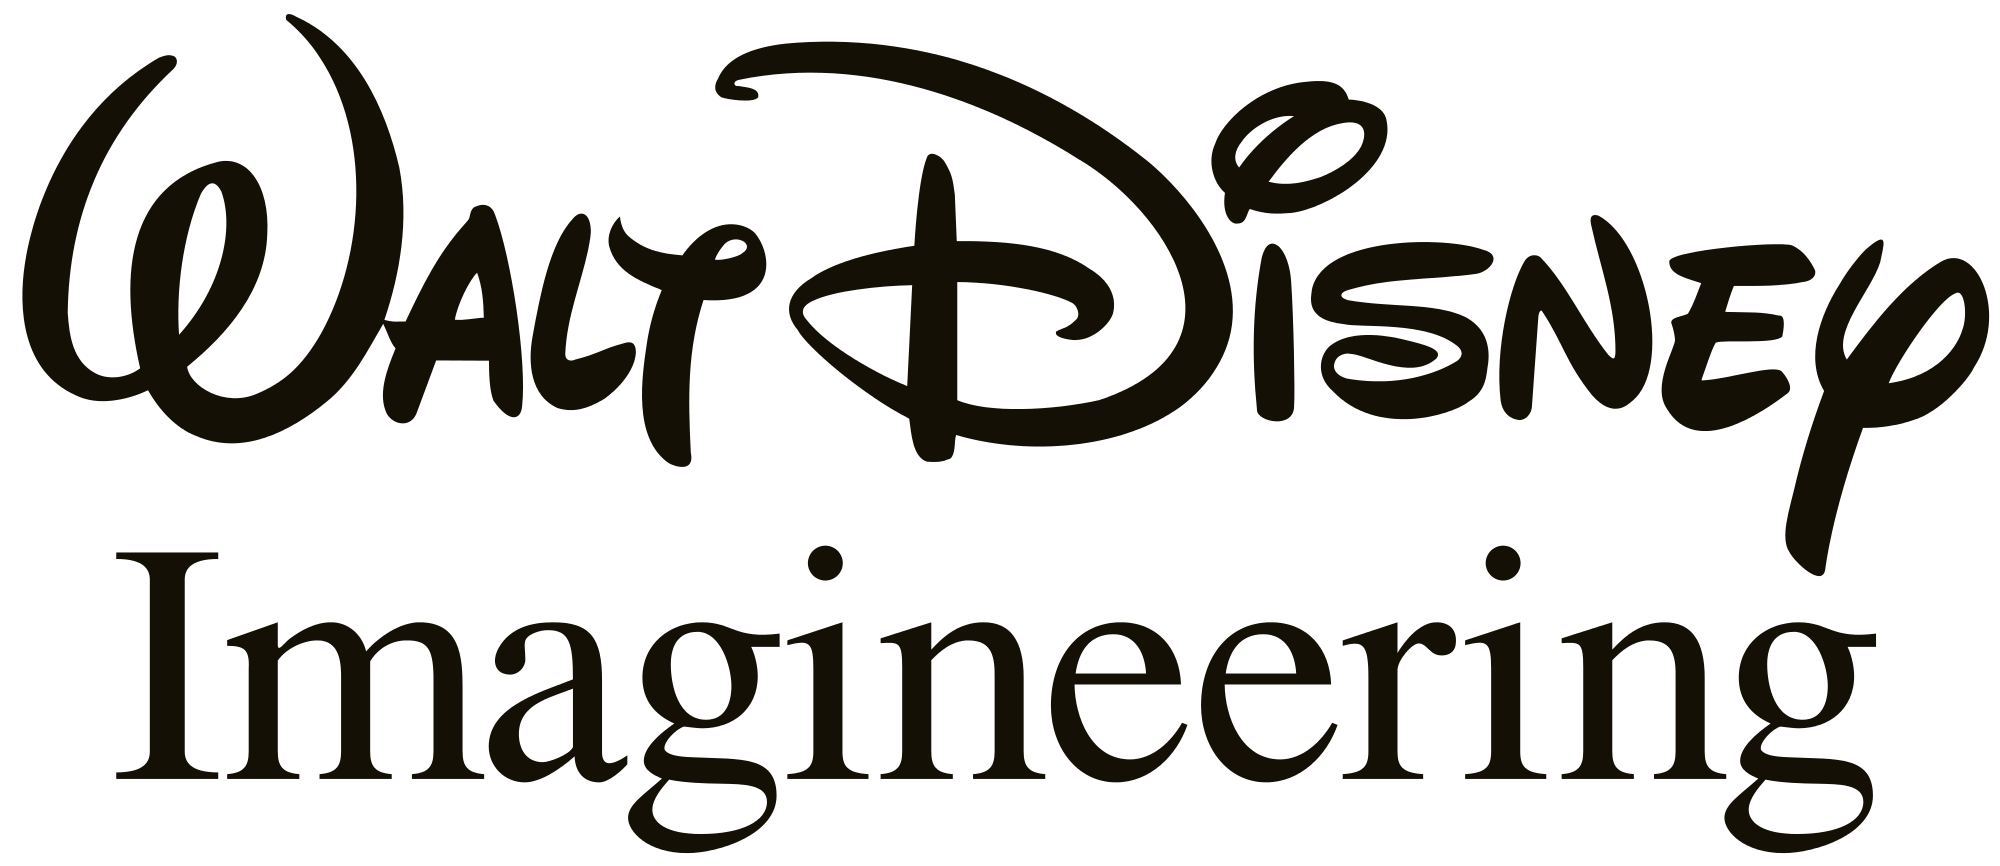 Walt Disney Original Logo - Walt Disney Imagineering logo.svg